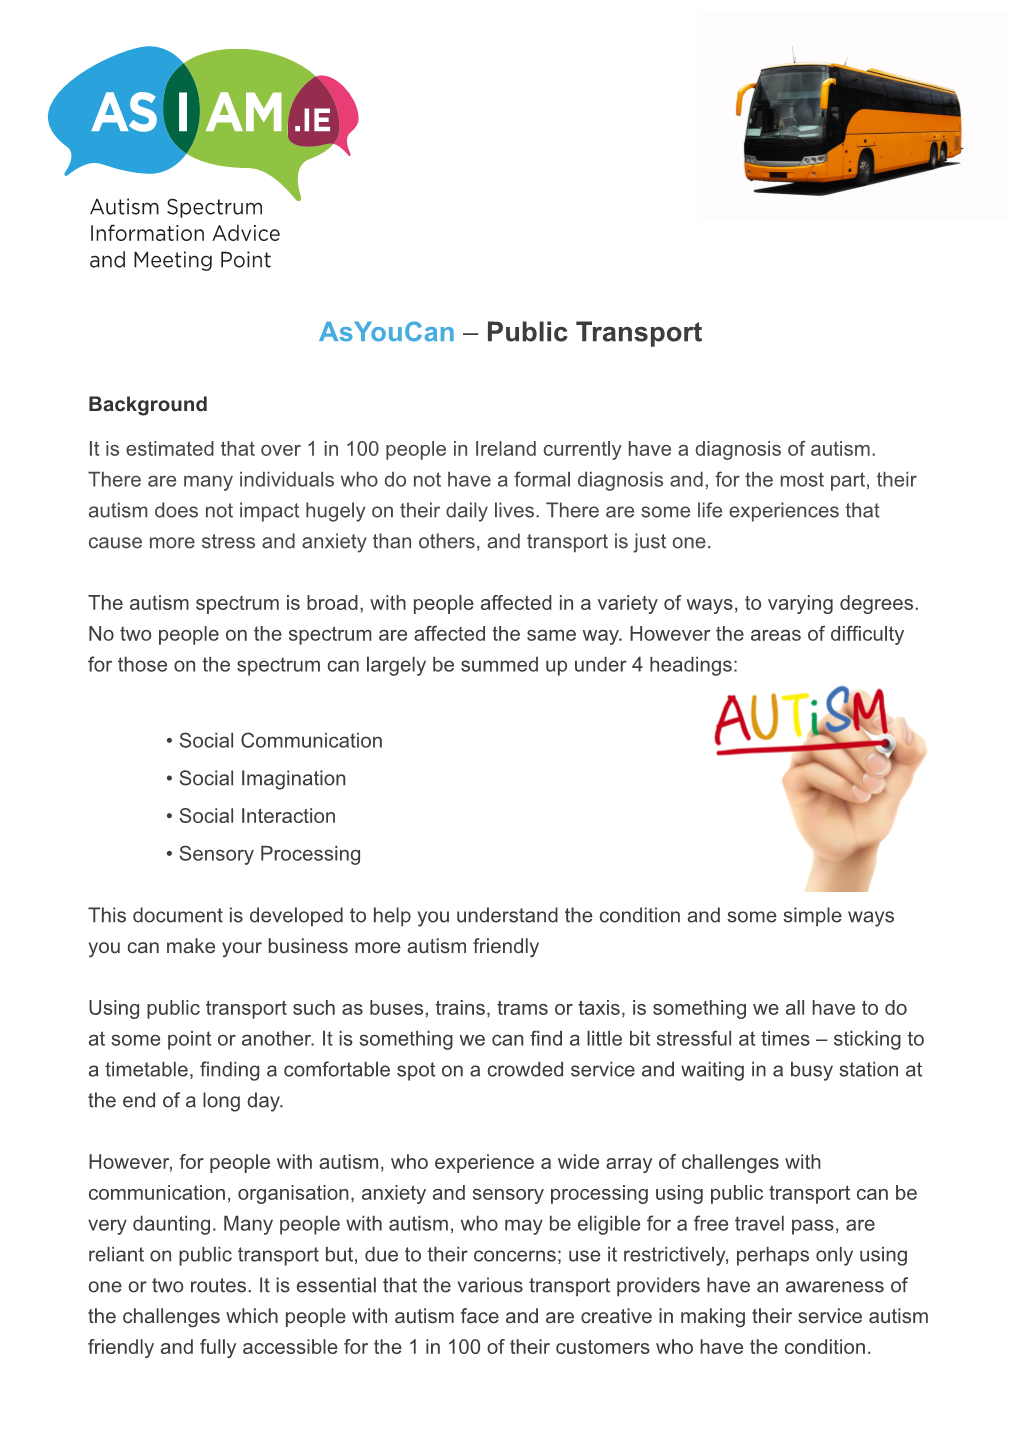 Asyoucan – Public Transport